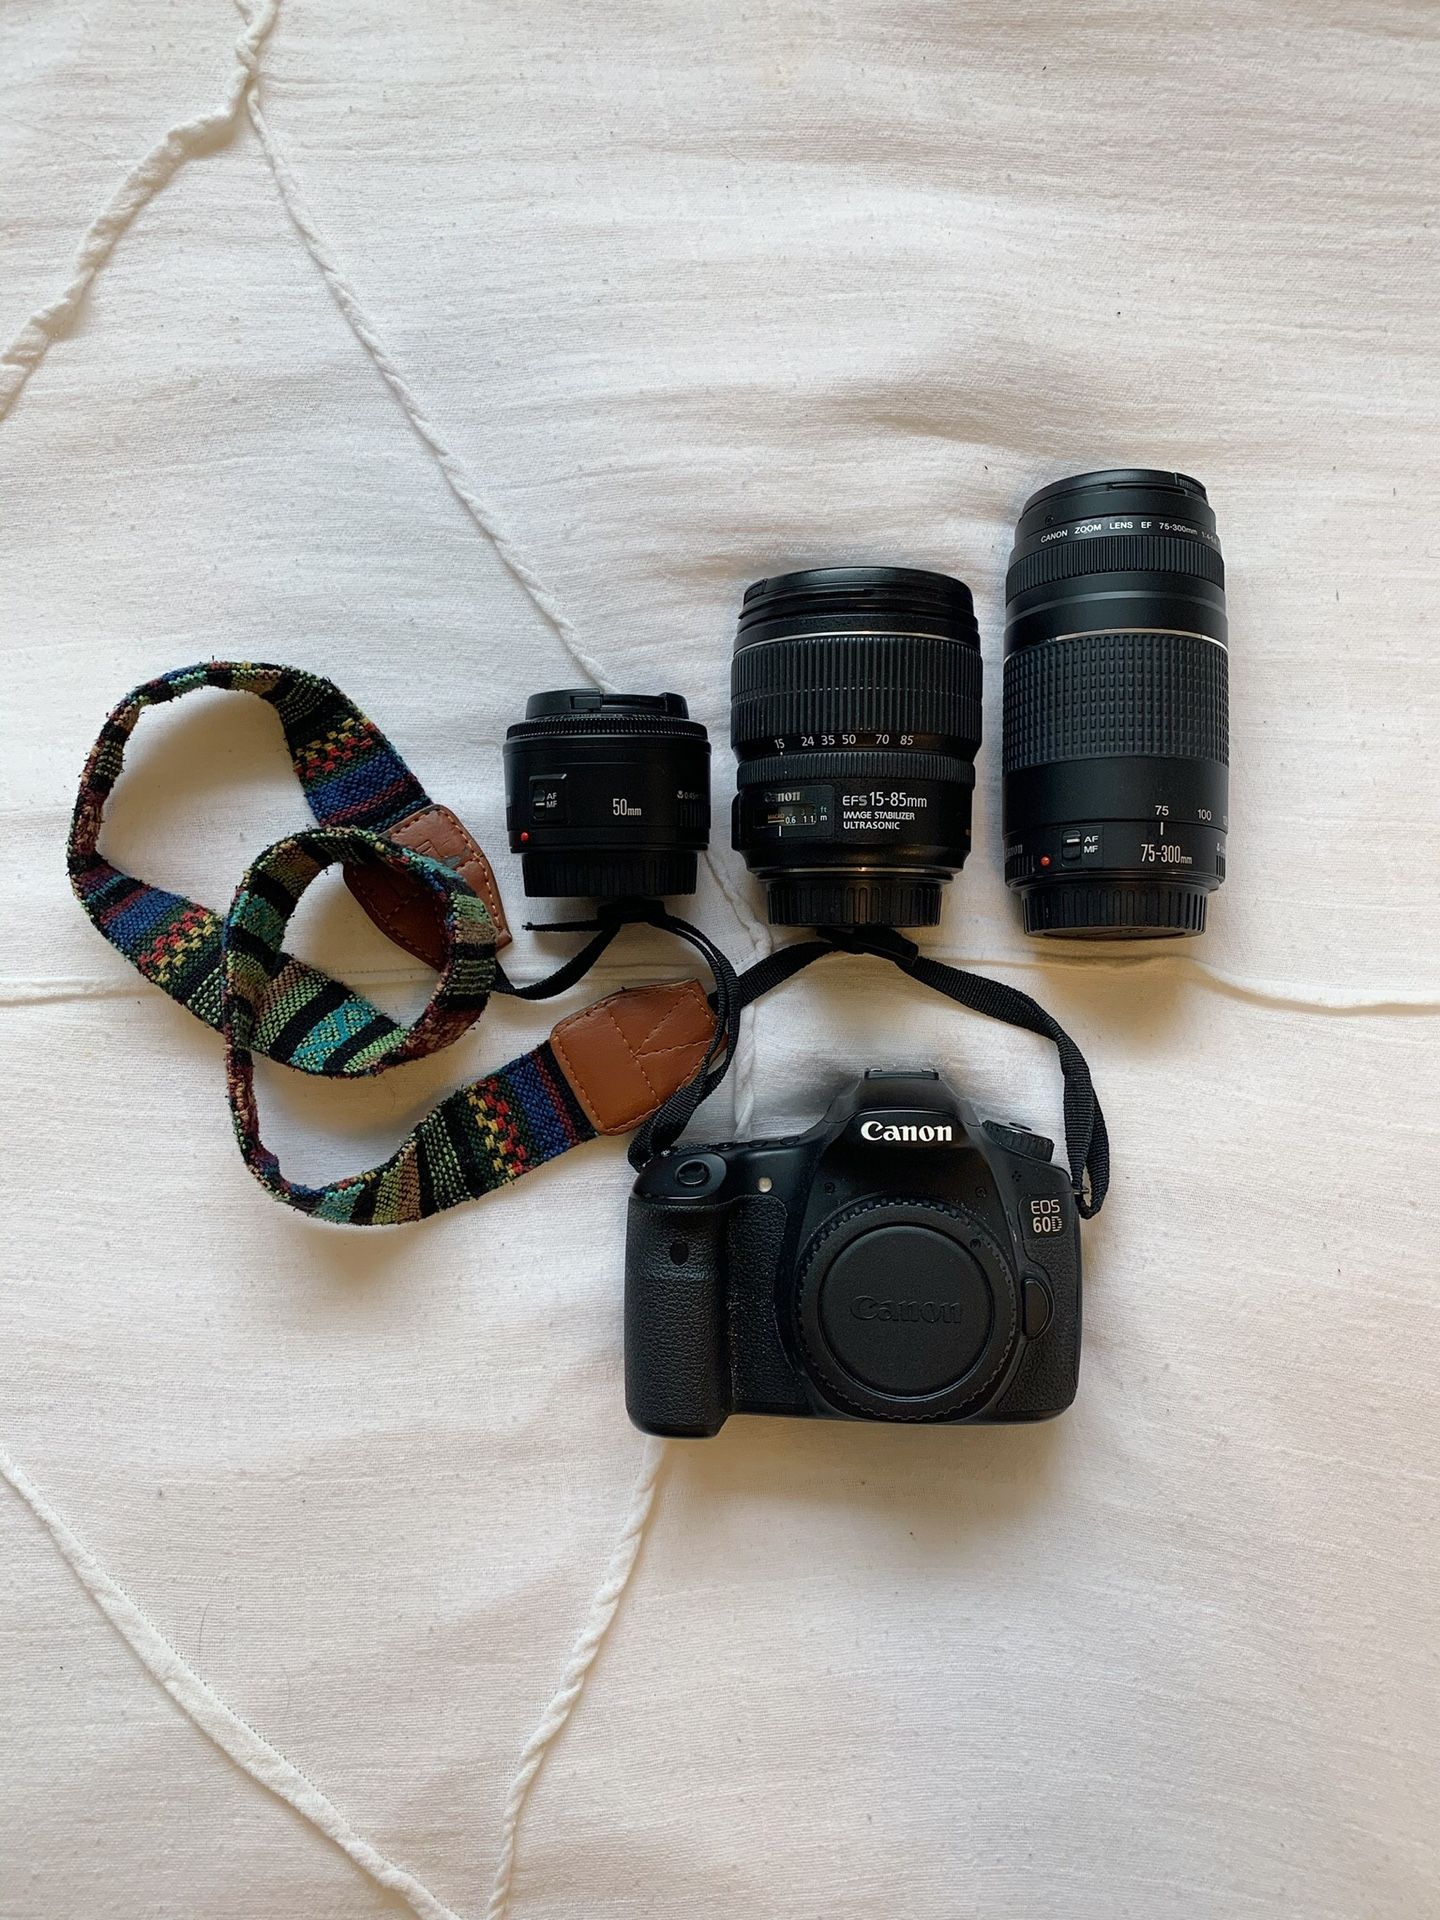 Canon EOS 60D DSLR Camera and Lenses